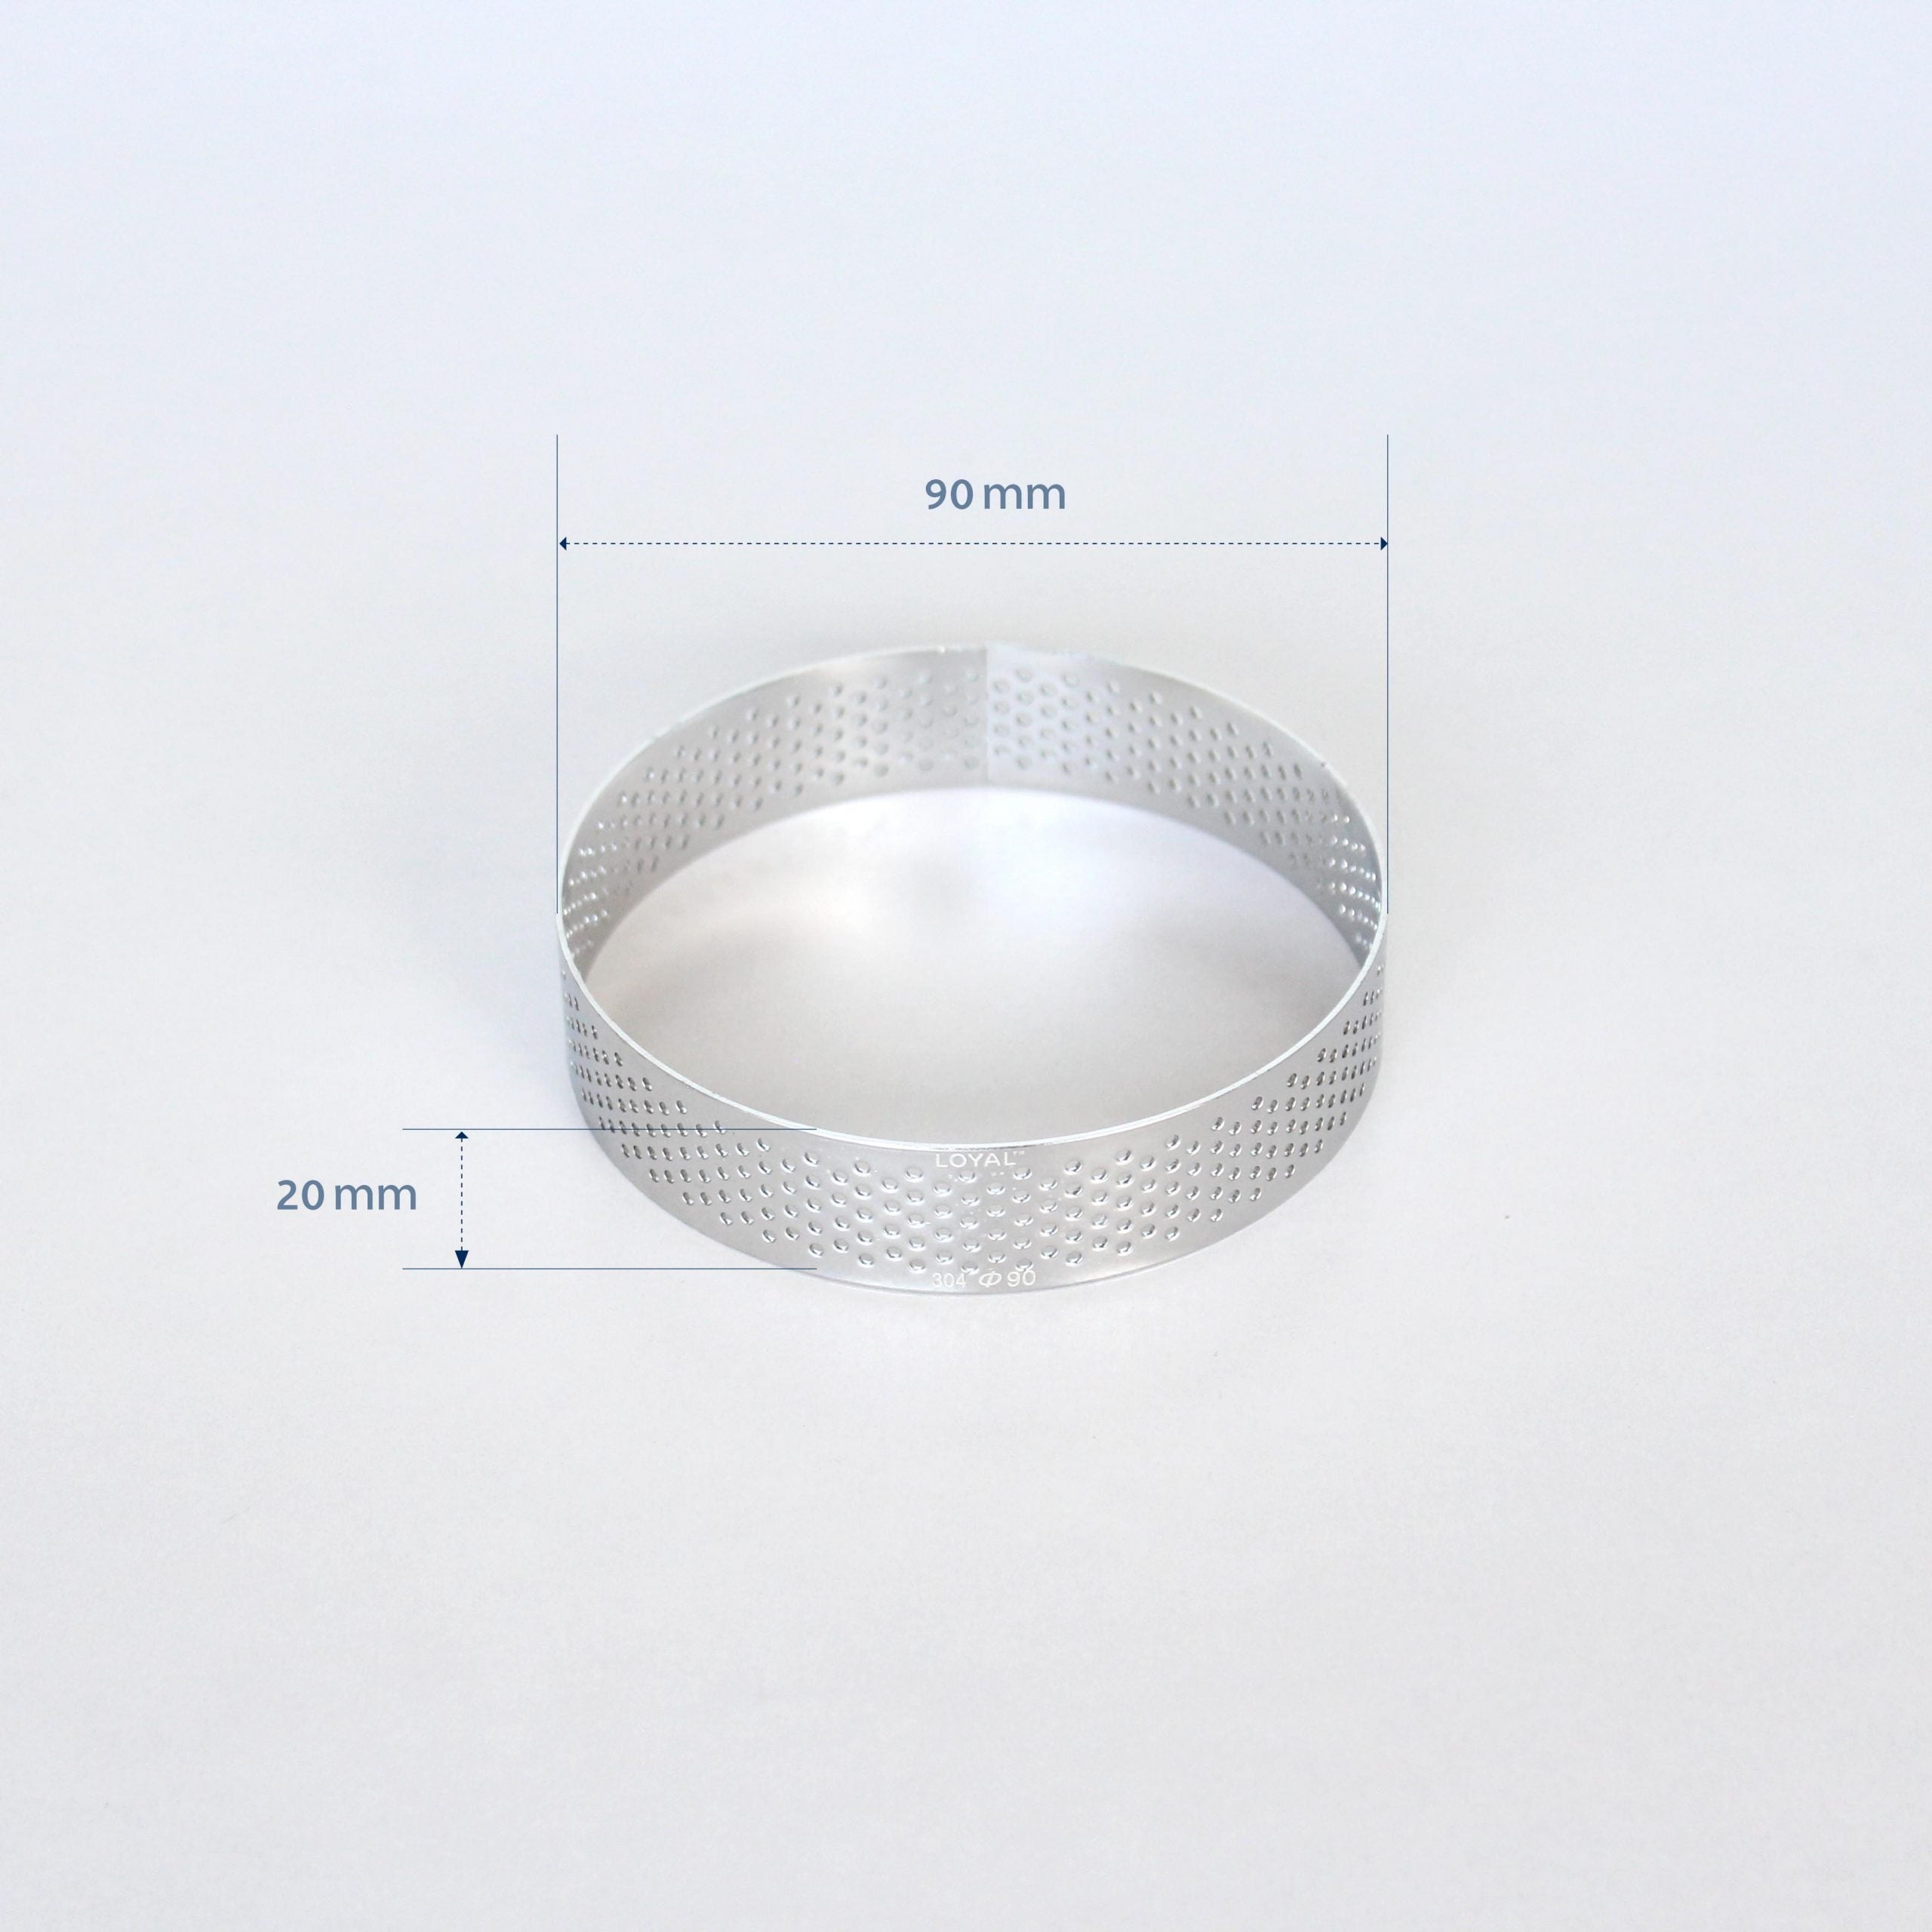 LOYAL 90mm Perforated Tart Ring